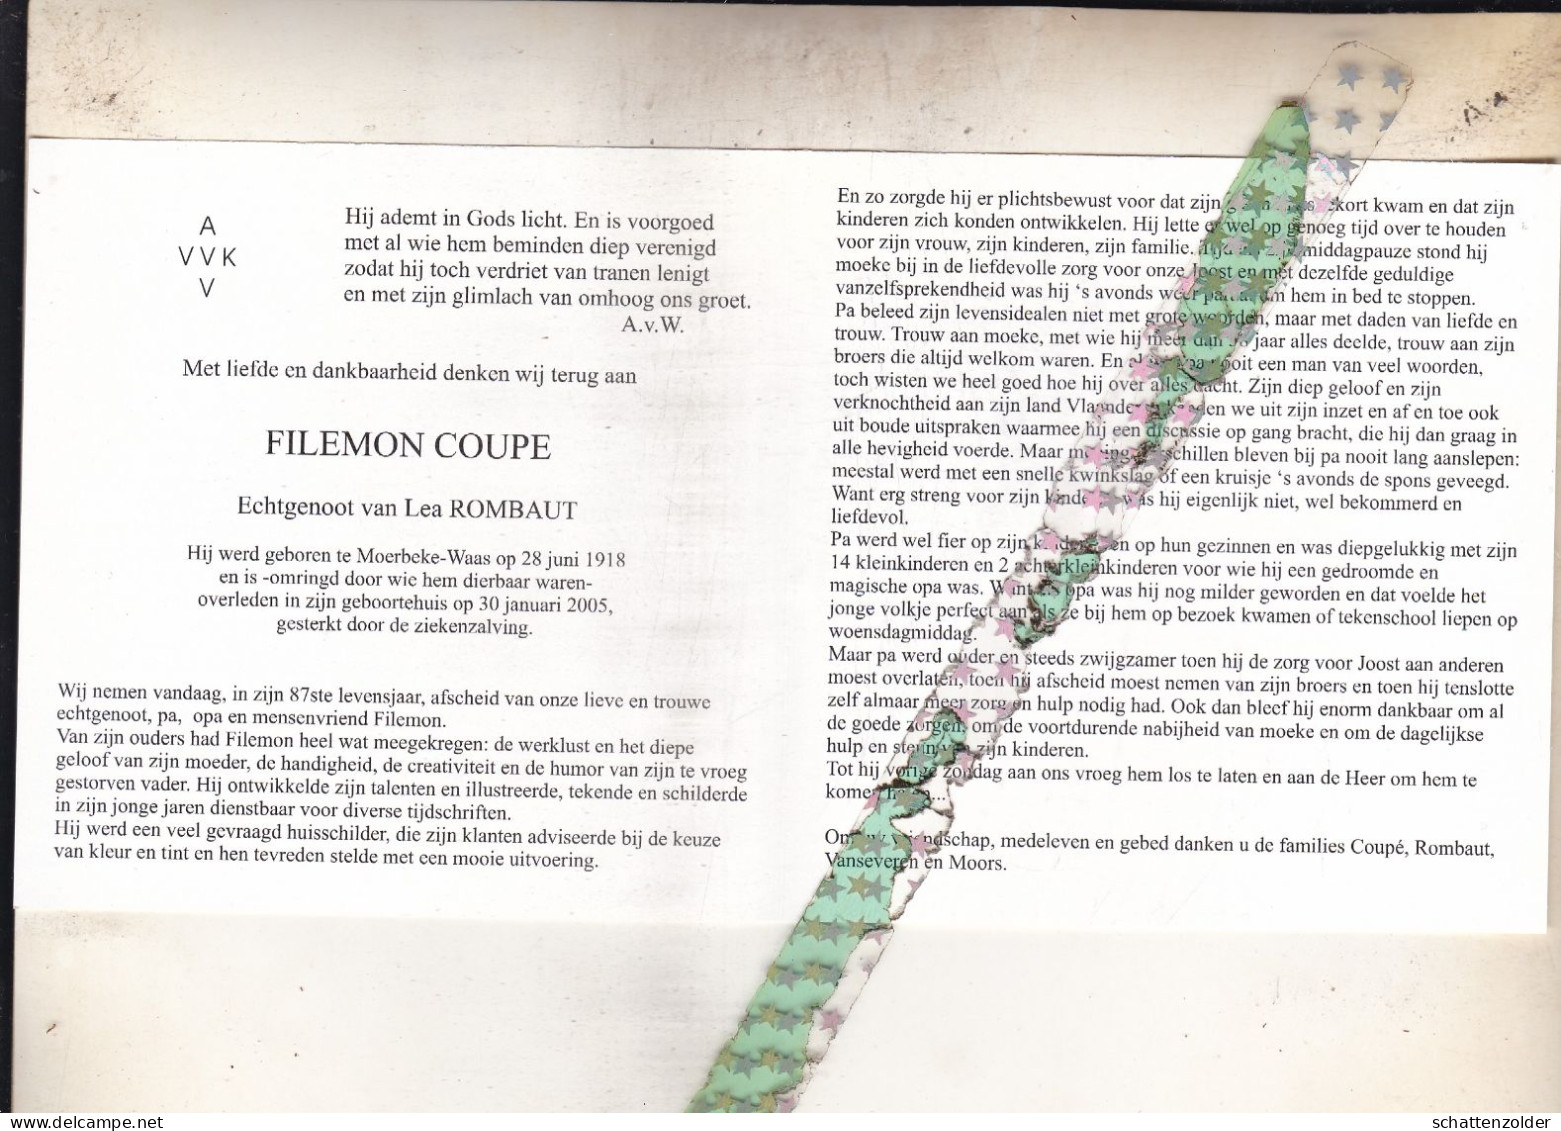 Filemon Coupe-Rombaut, Moerbeke-Waas 1918, 2005. AVV VVK. Foto Schilderij - Obituary Notices